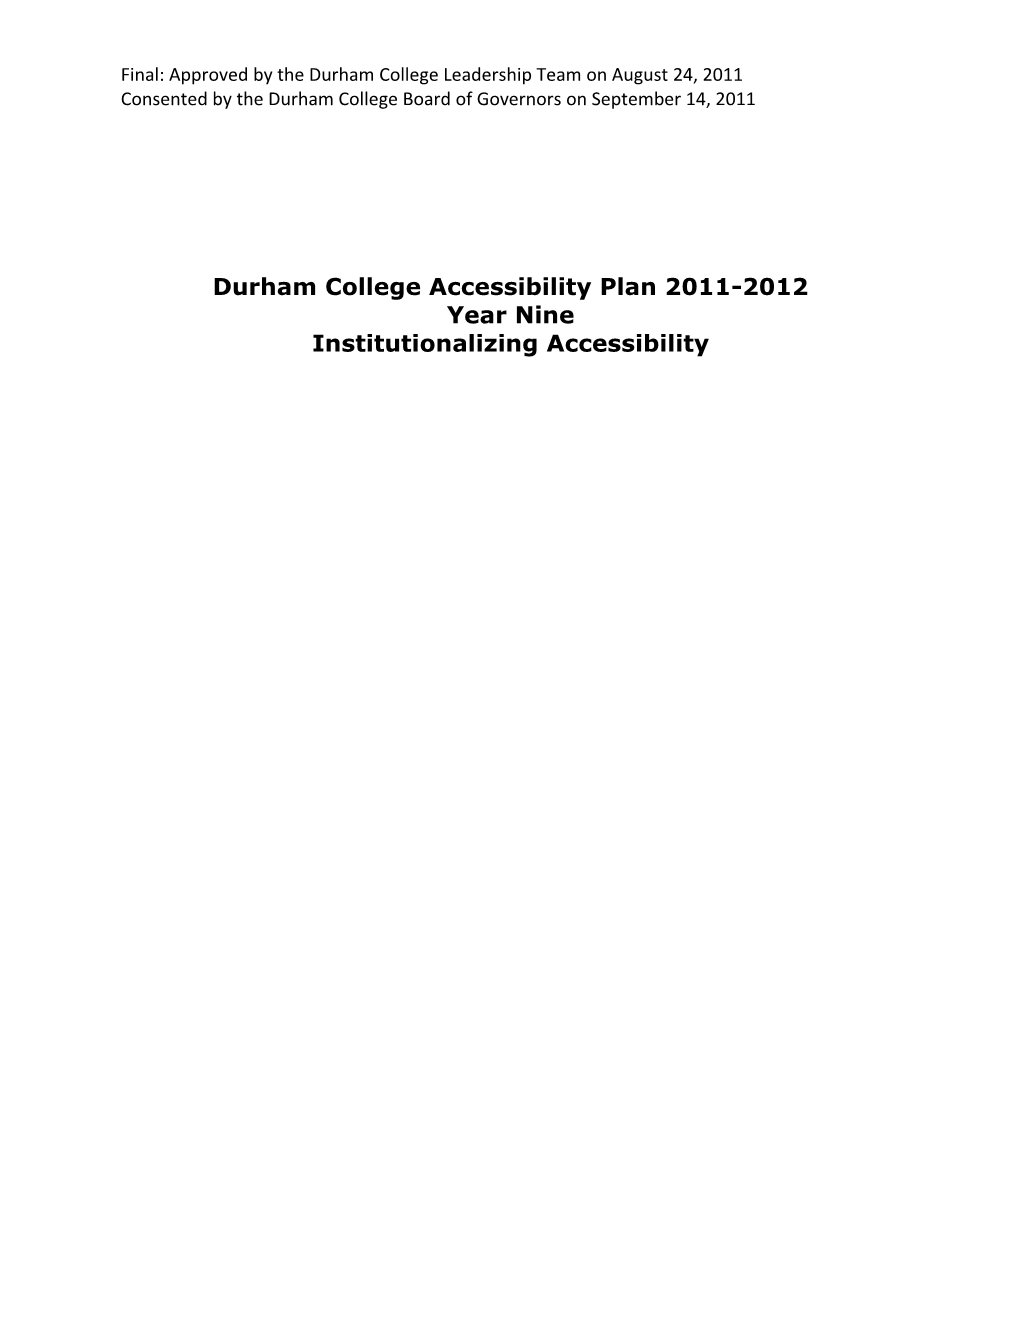 Durham College Accessibility Plan 2011-2012